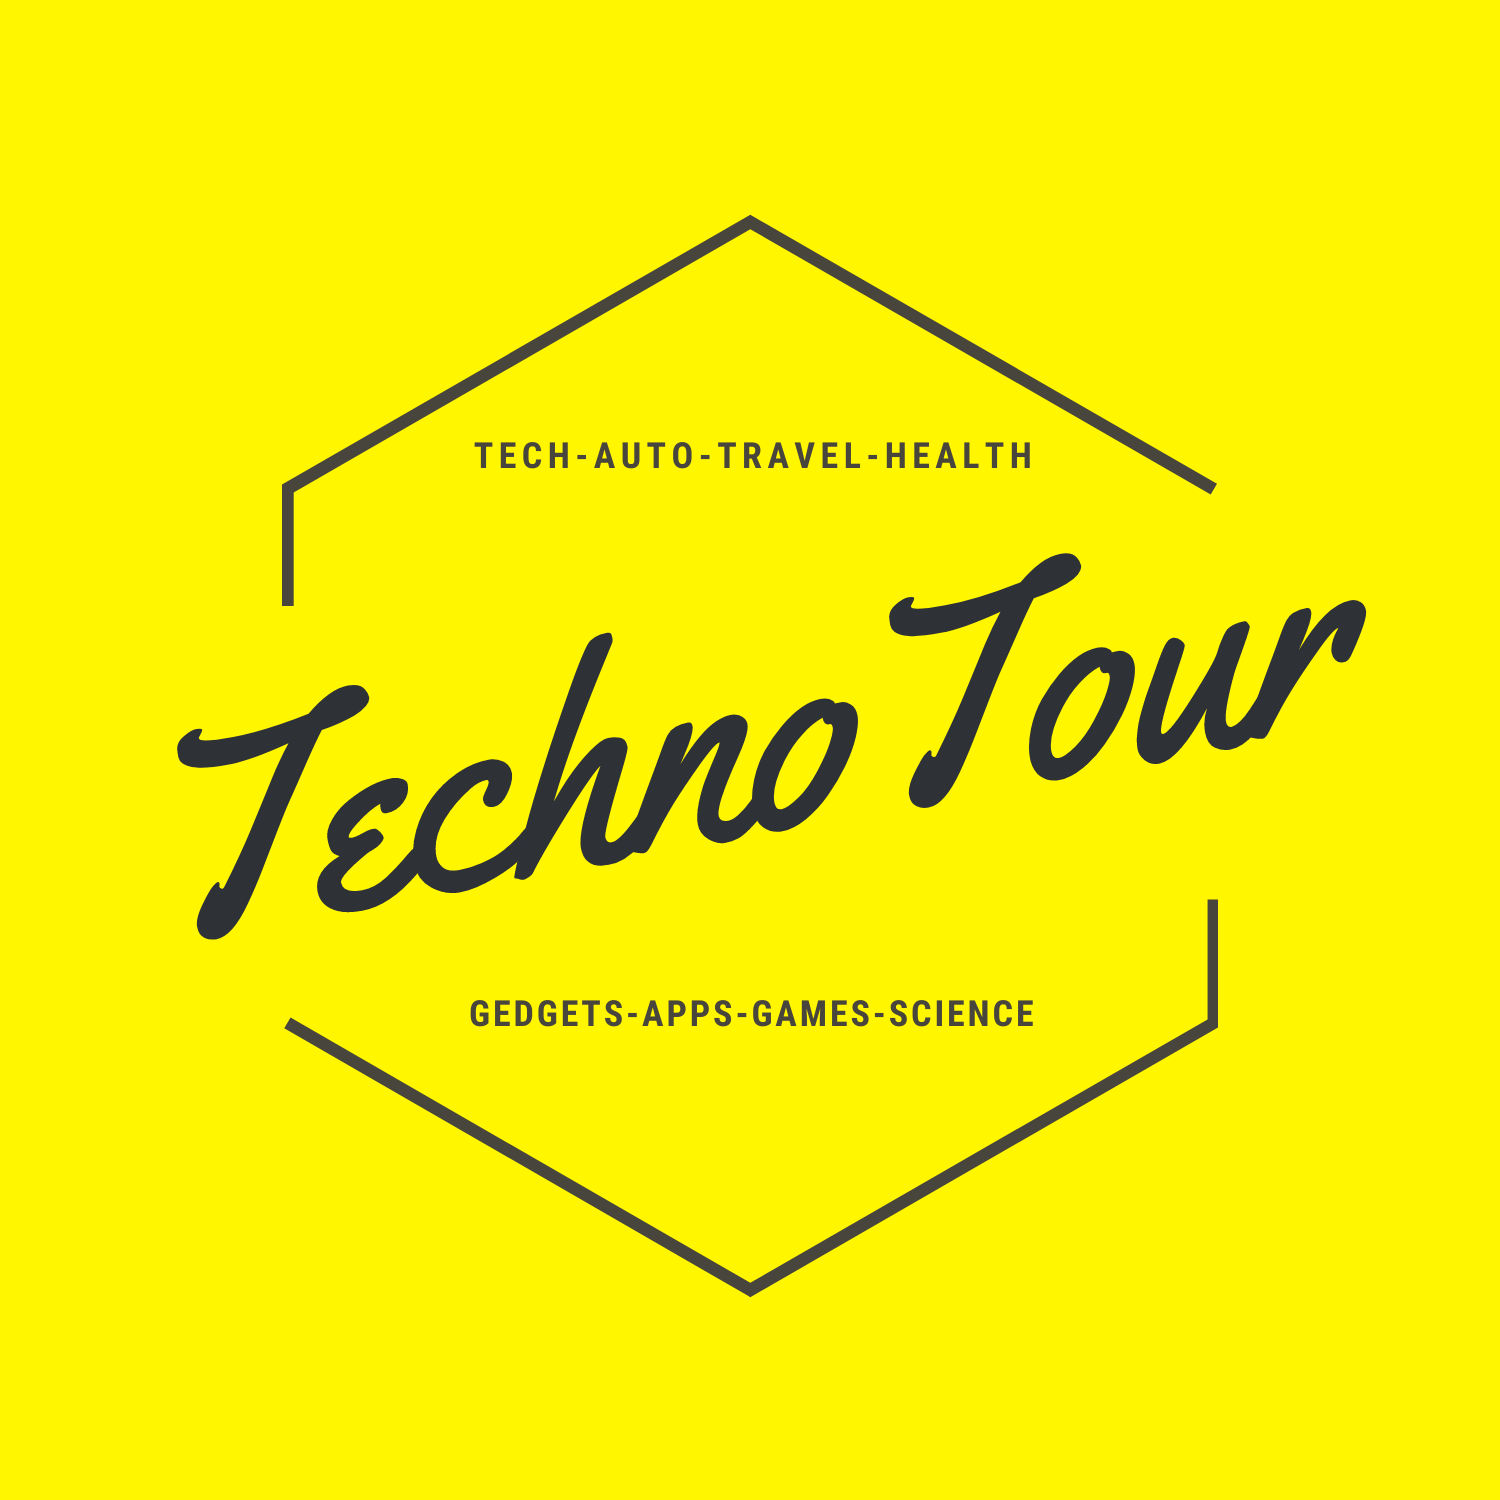 TechnoTour